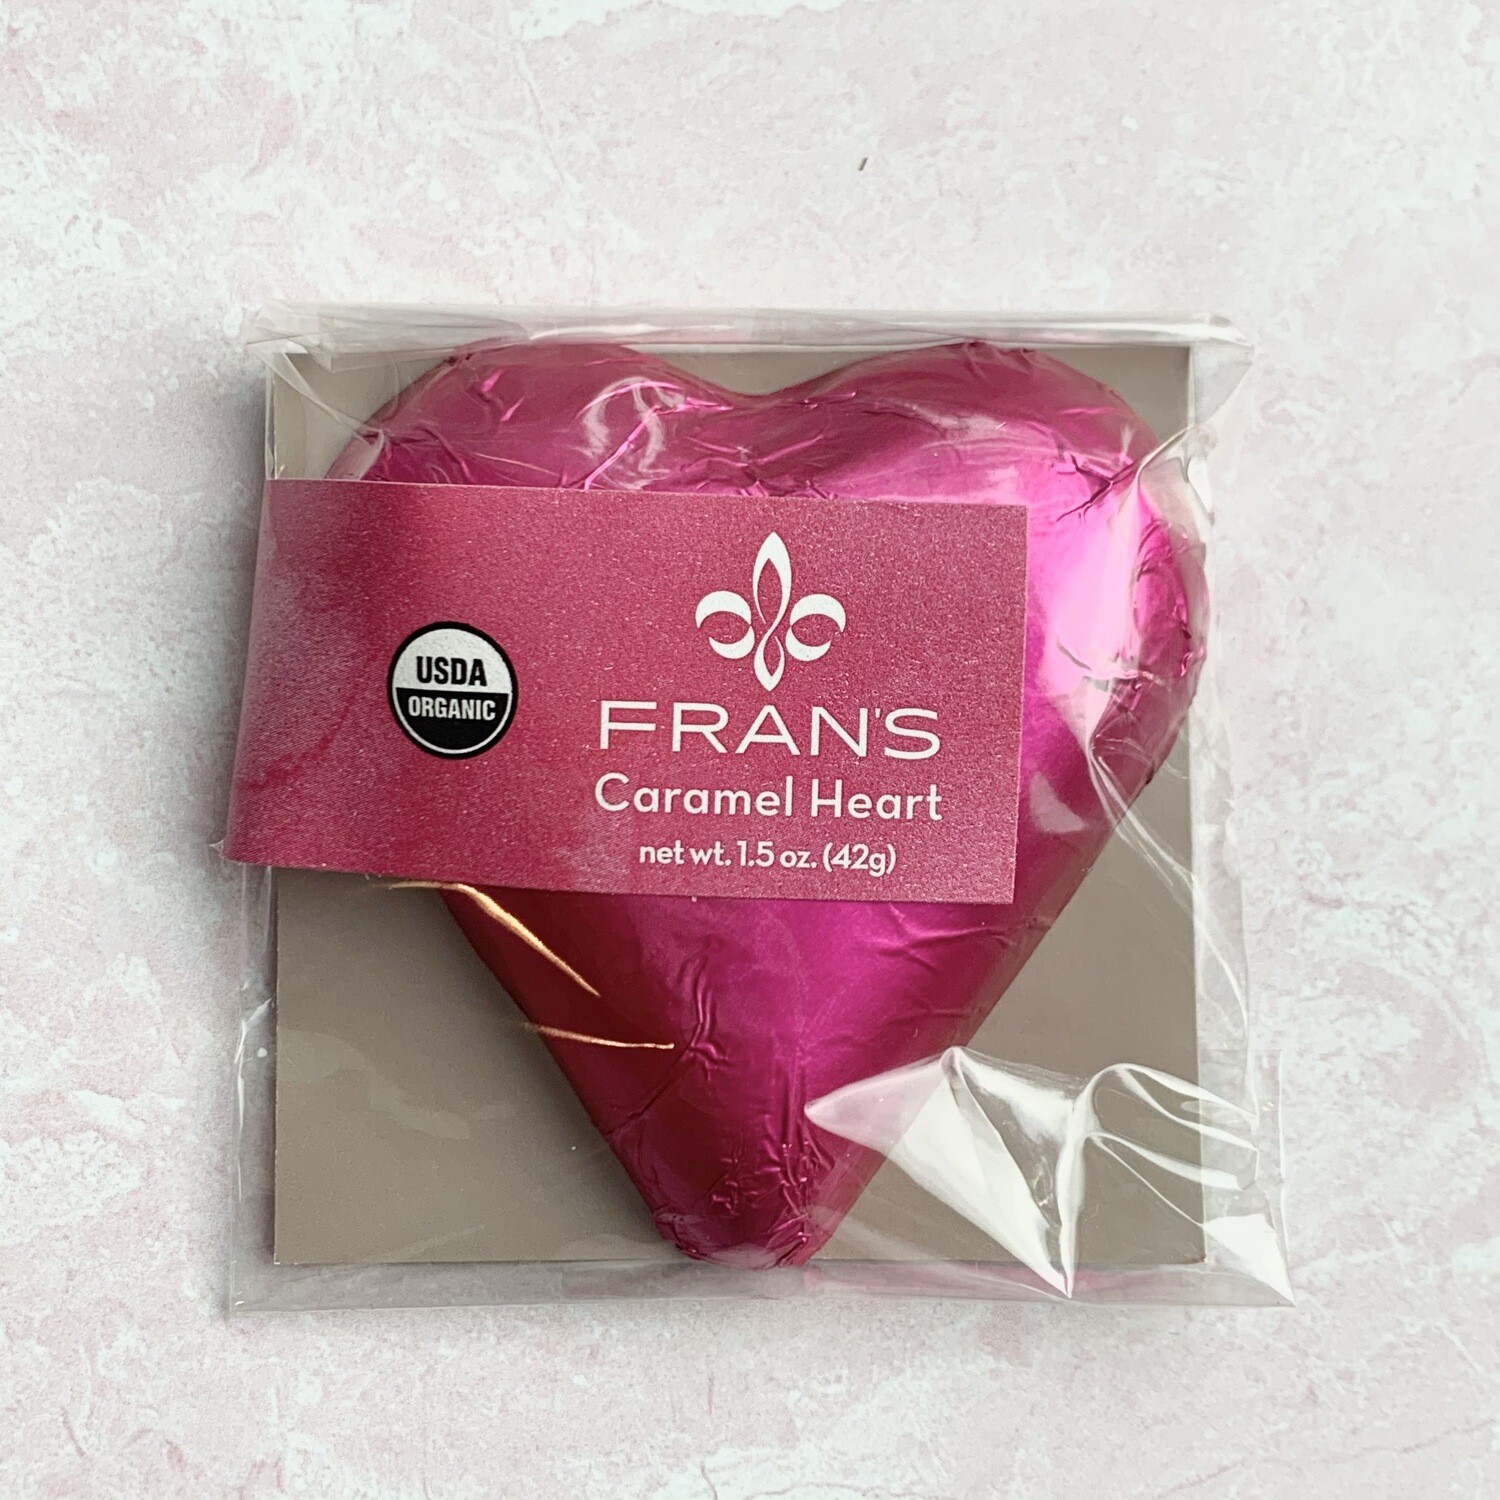 Fran's Caramel Heart